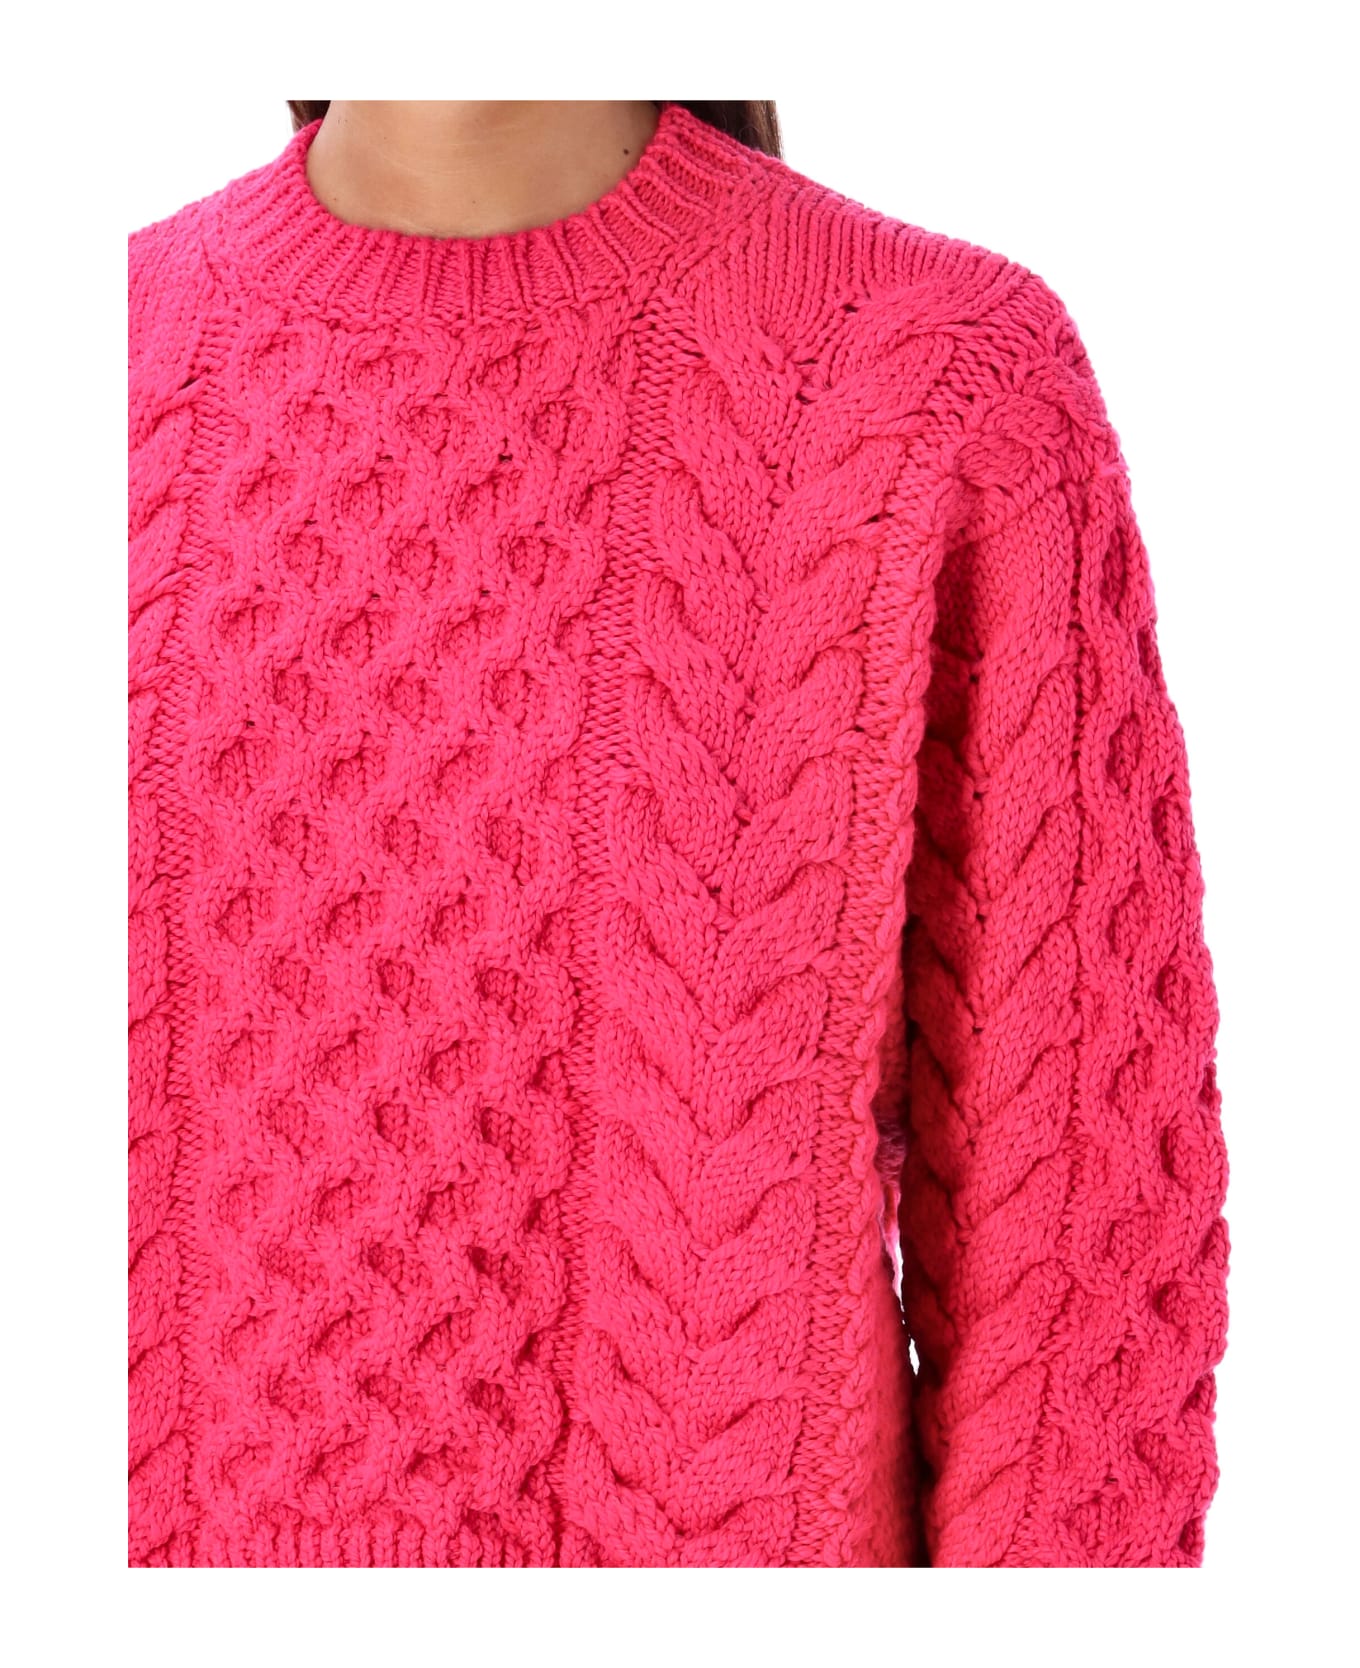 Marant Étoile Jake Knit Sweater - FUCSIA